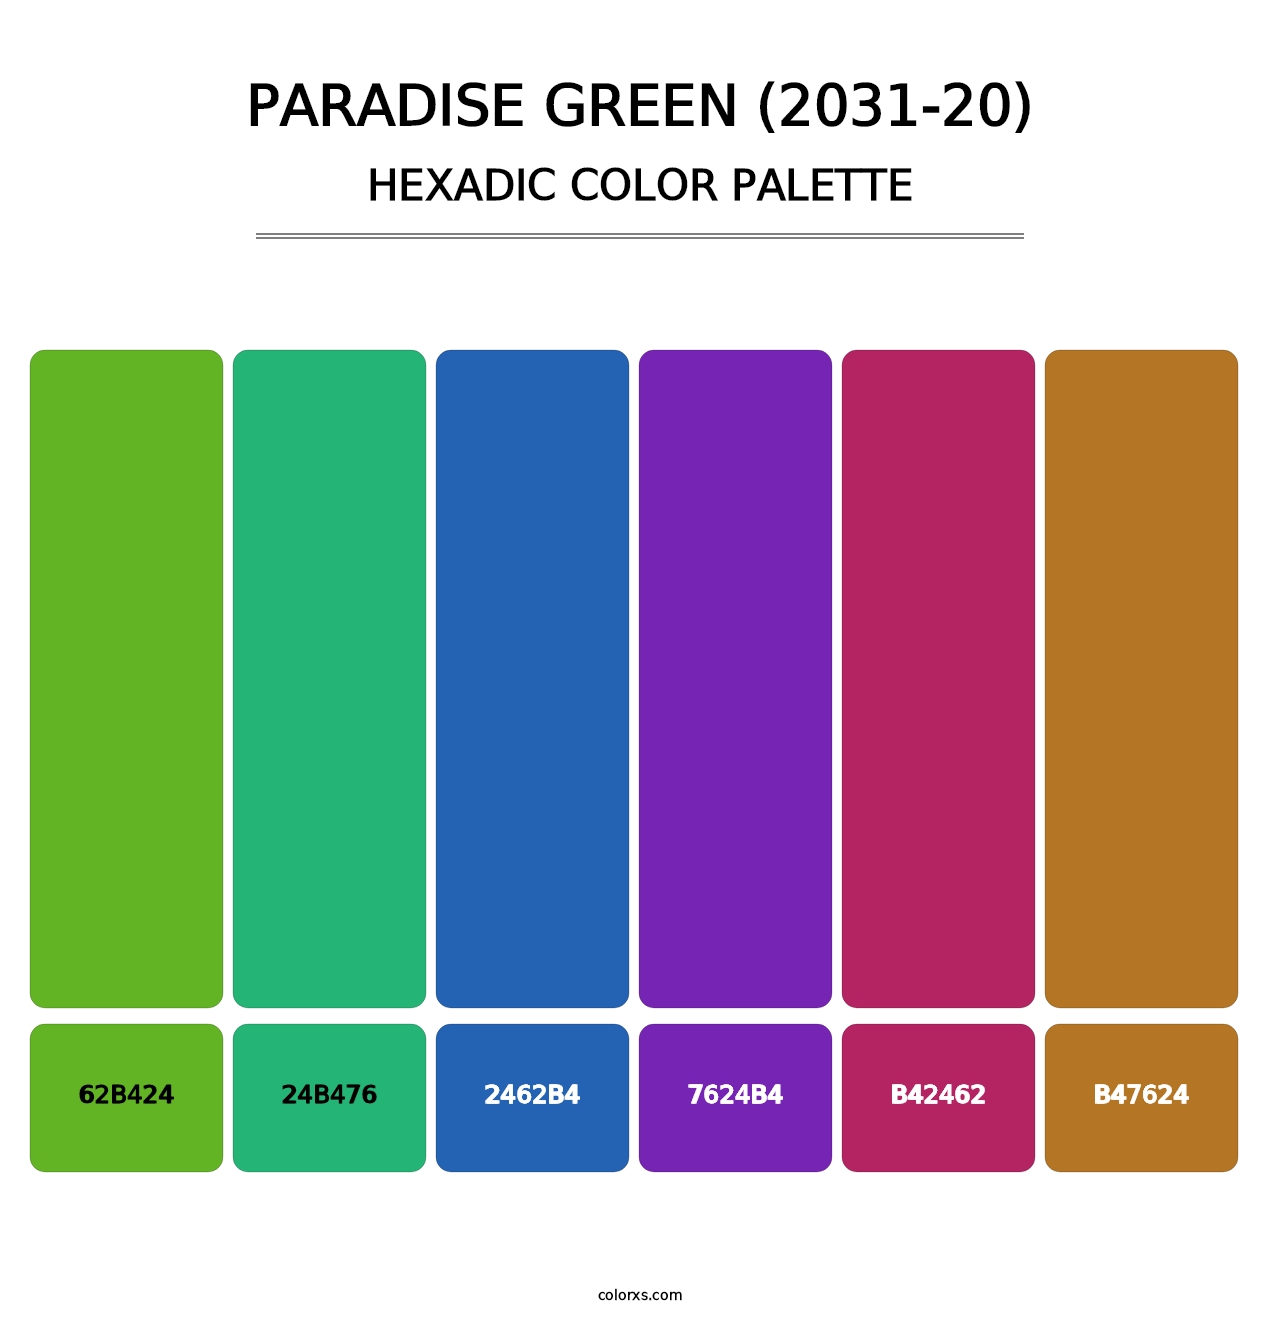 Paradise Green (2031-20) - Hexadic Color Palette